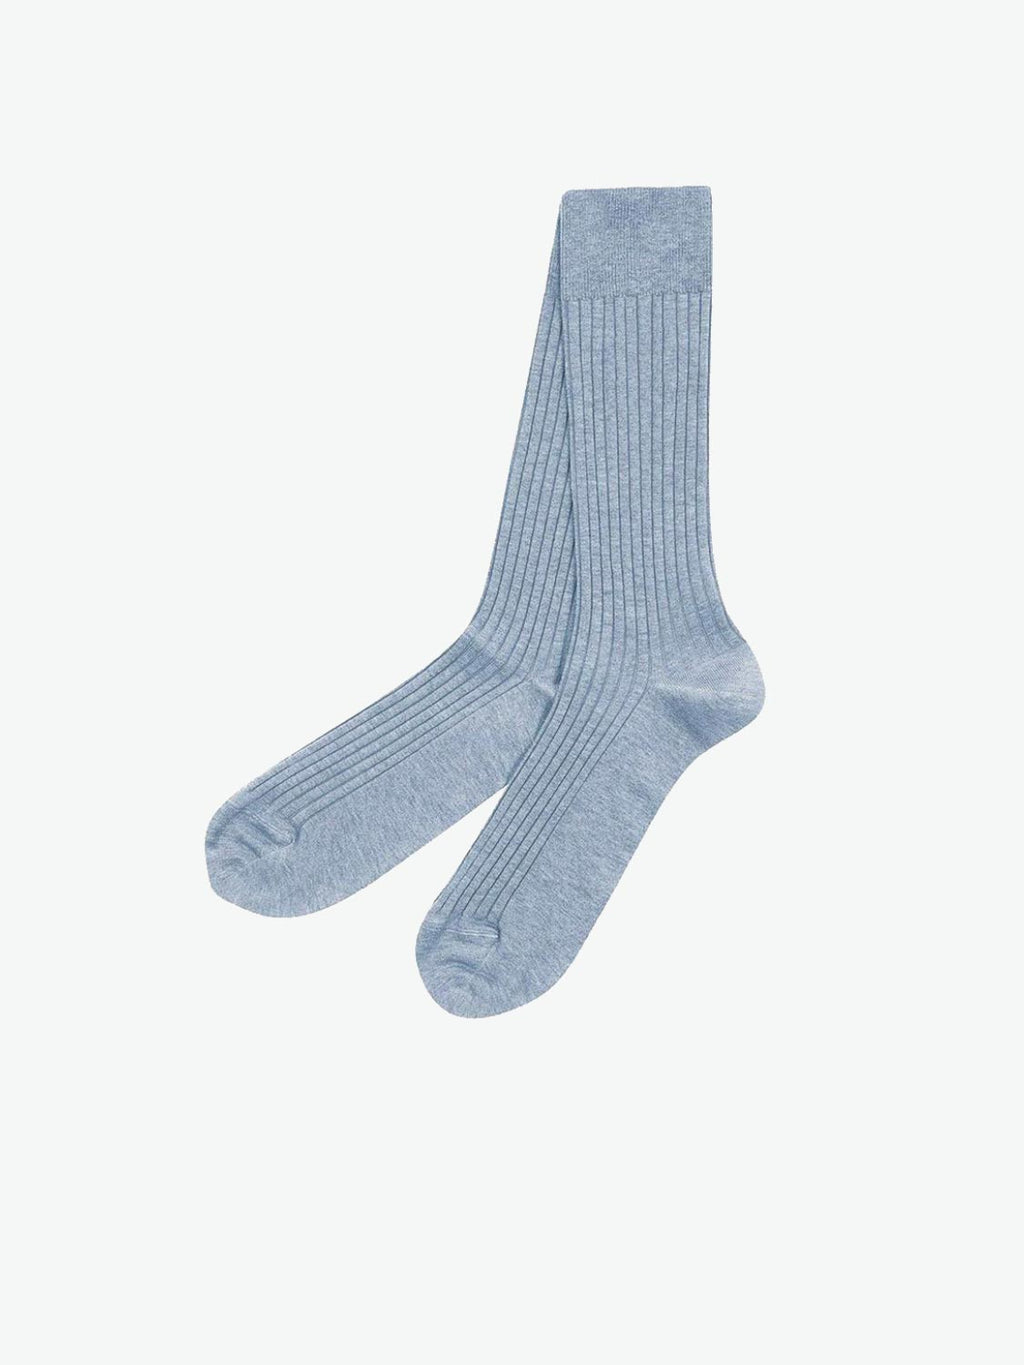 Pantherella Danvers Socks Sky Blue | The Project Garments - A